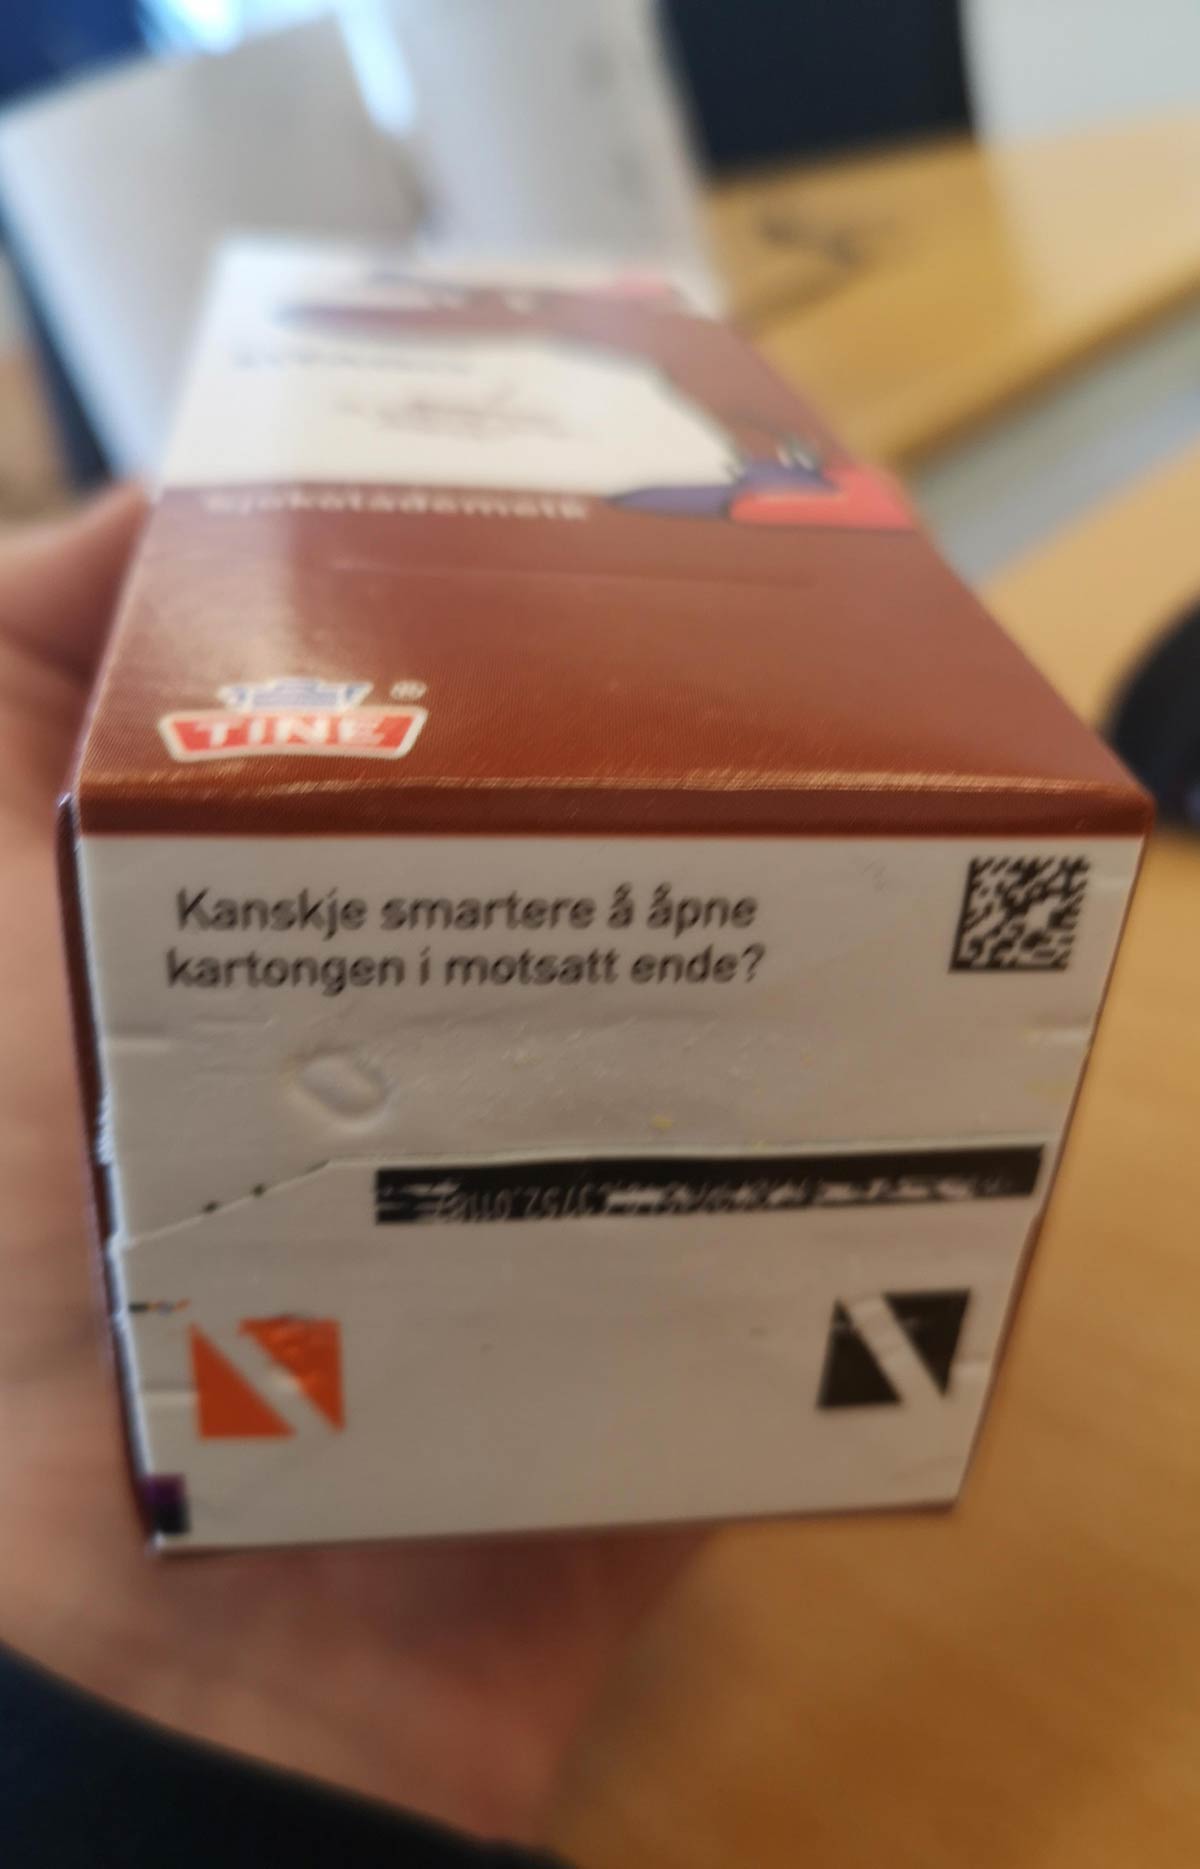 The bottom of this chocolate milk carton says 